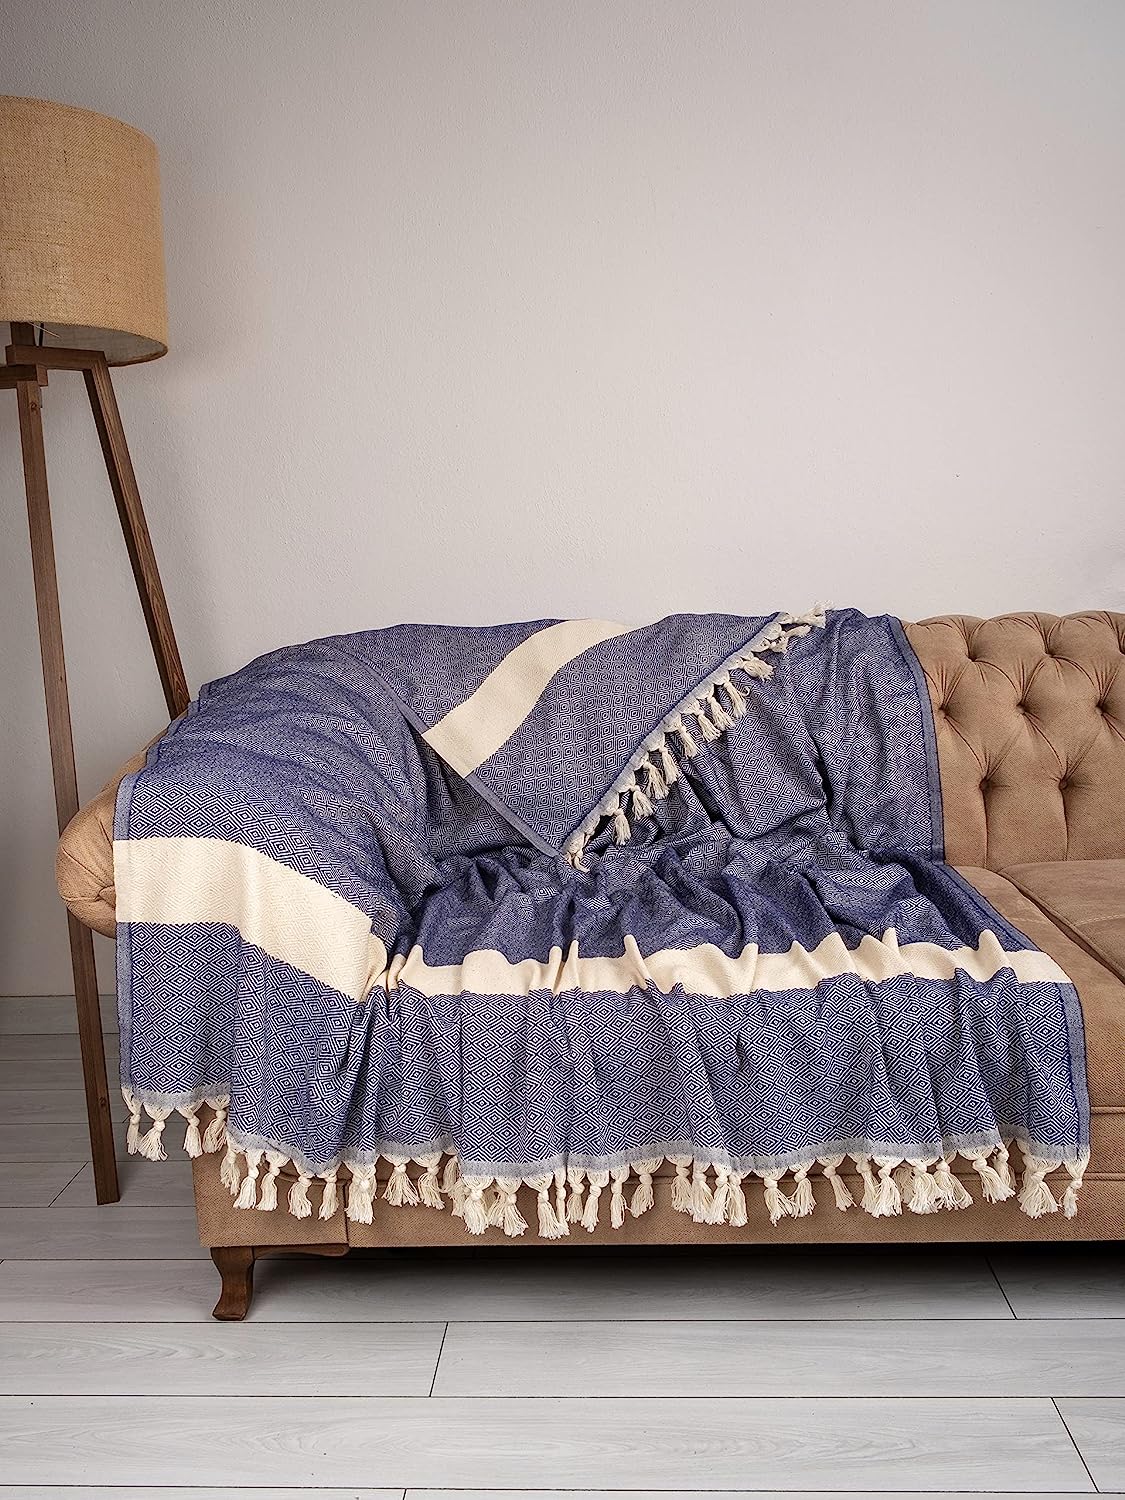 DEMMEX 90x82 Inches XXXL Turkish Cotton Multipurpose Blanket, Throw Blanket Bedspread, Beach Picnic Blanket, 100% Turkish Cotton, Diamond Weave, Made in Turkey, 3lb (Navy Blue)